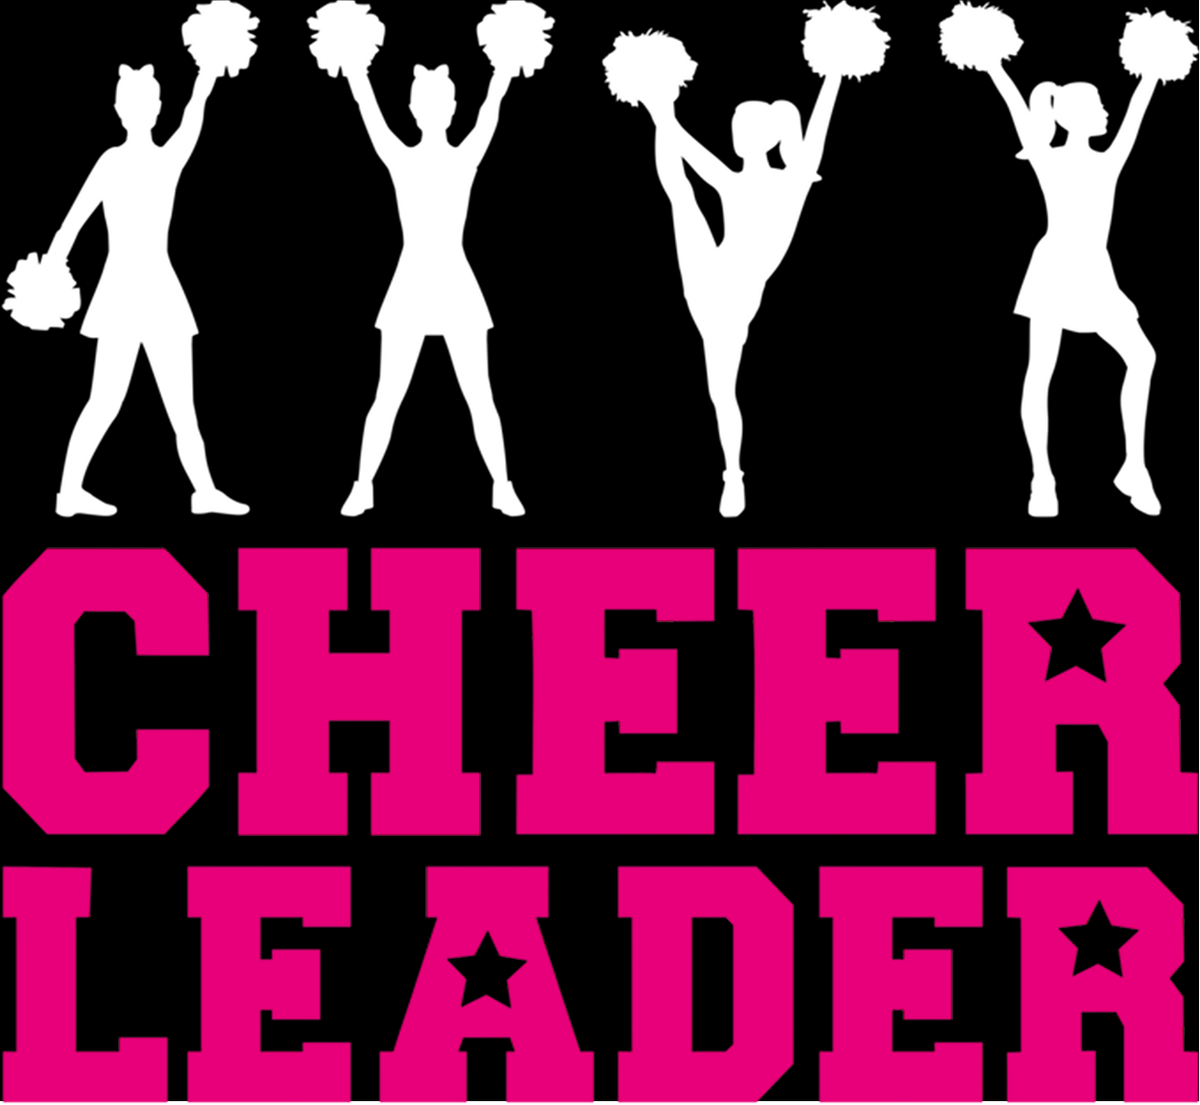 DTF Screen Print Image - Cheerleader (33)